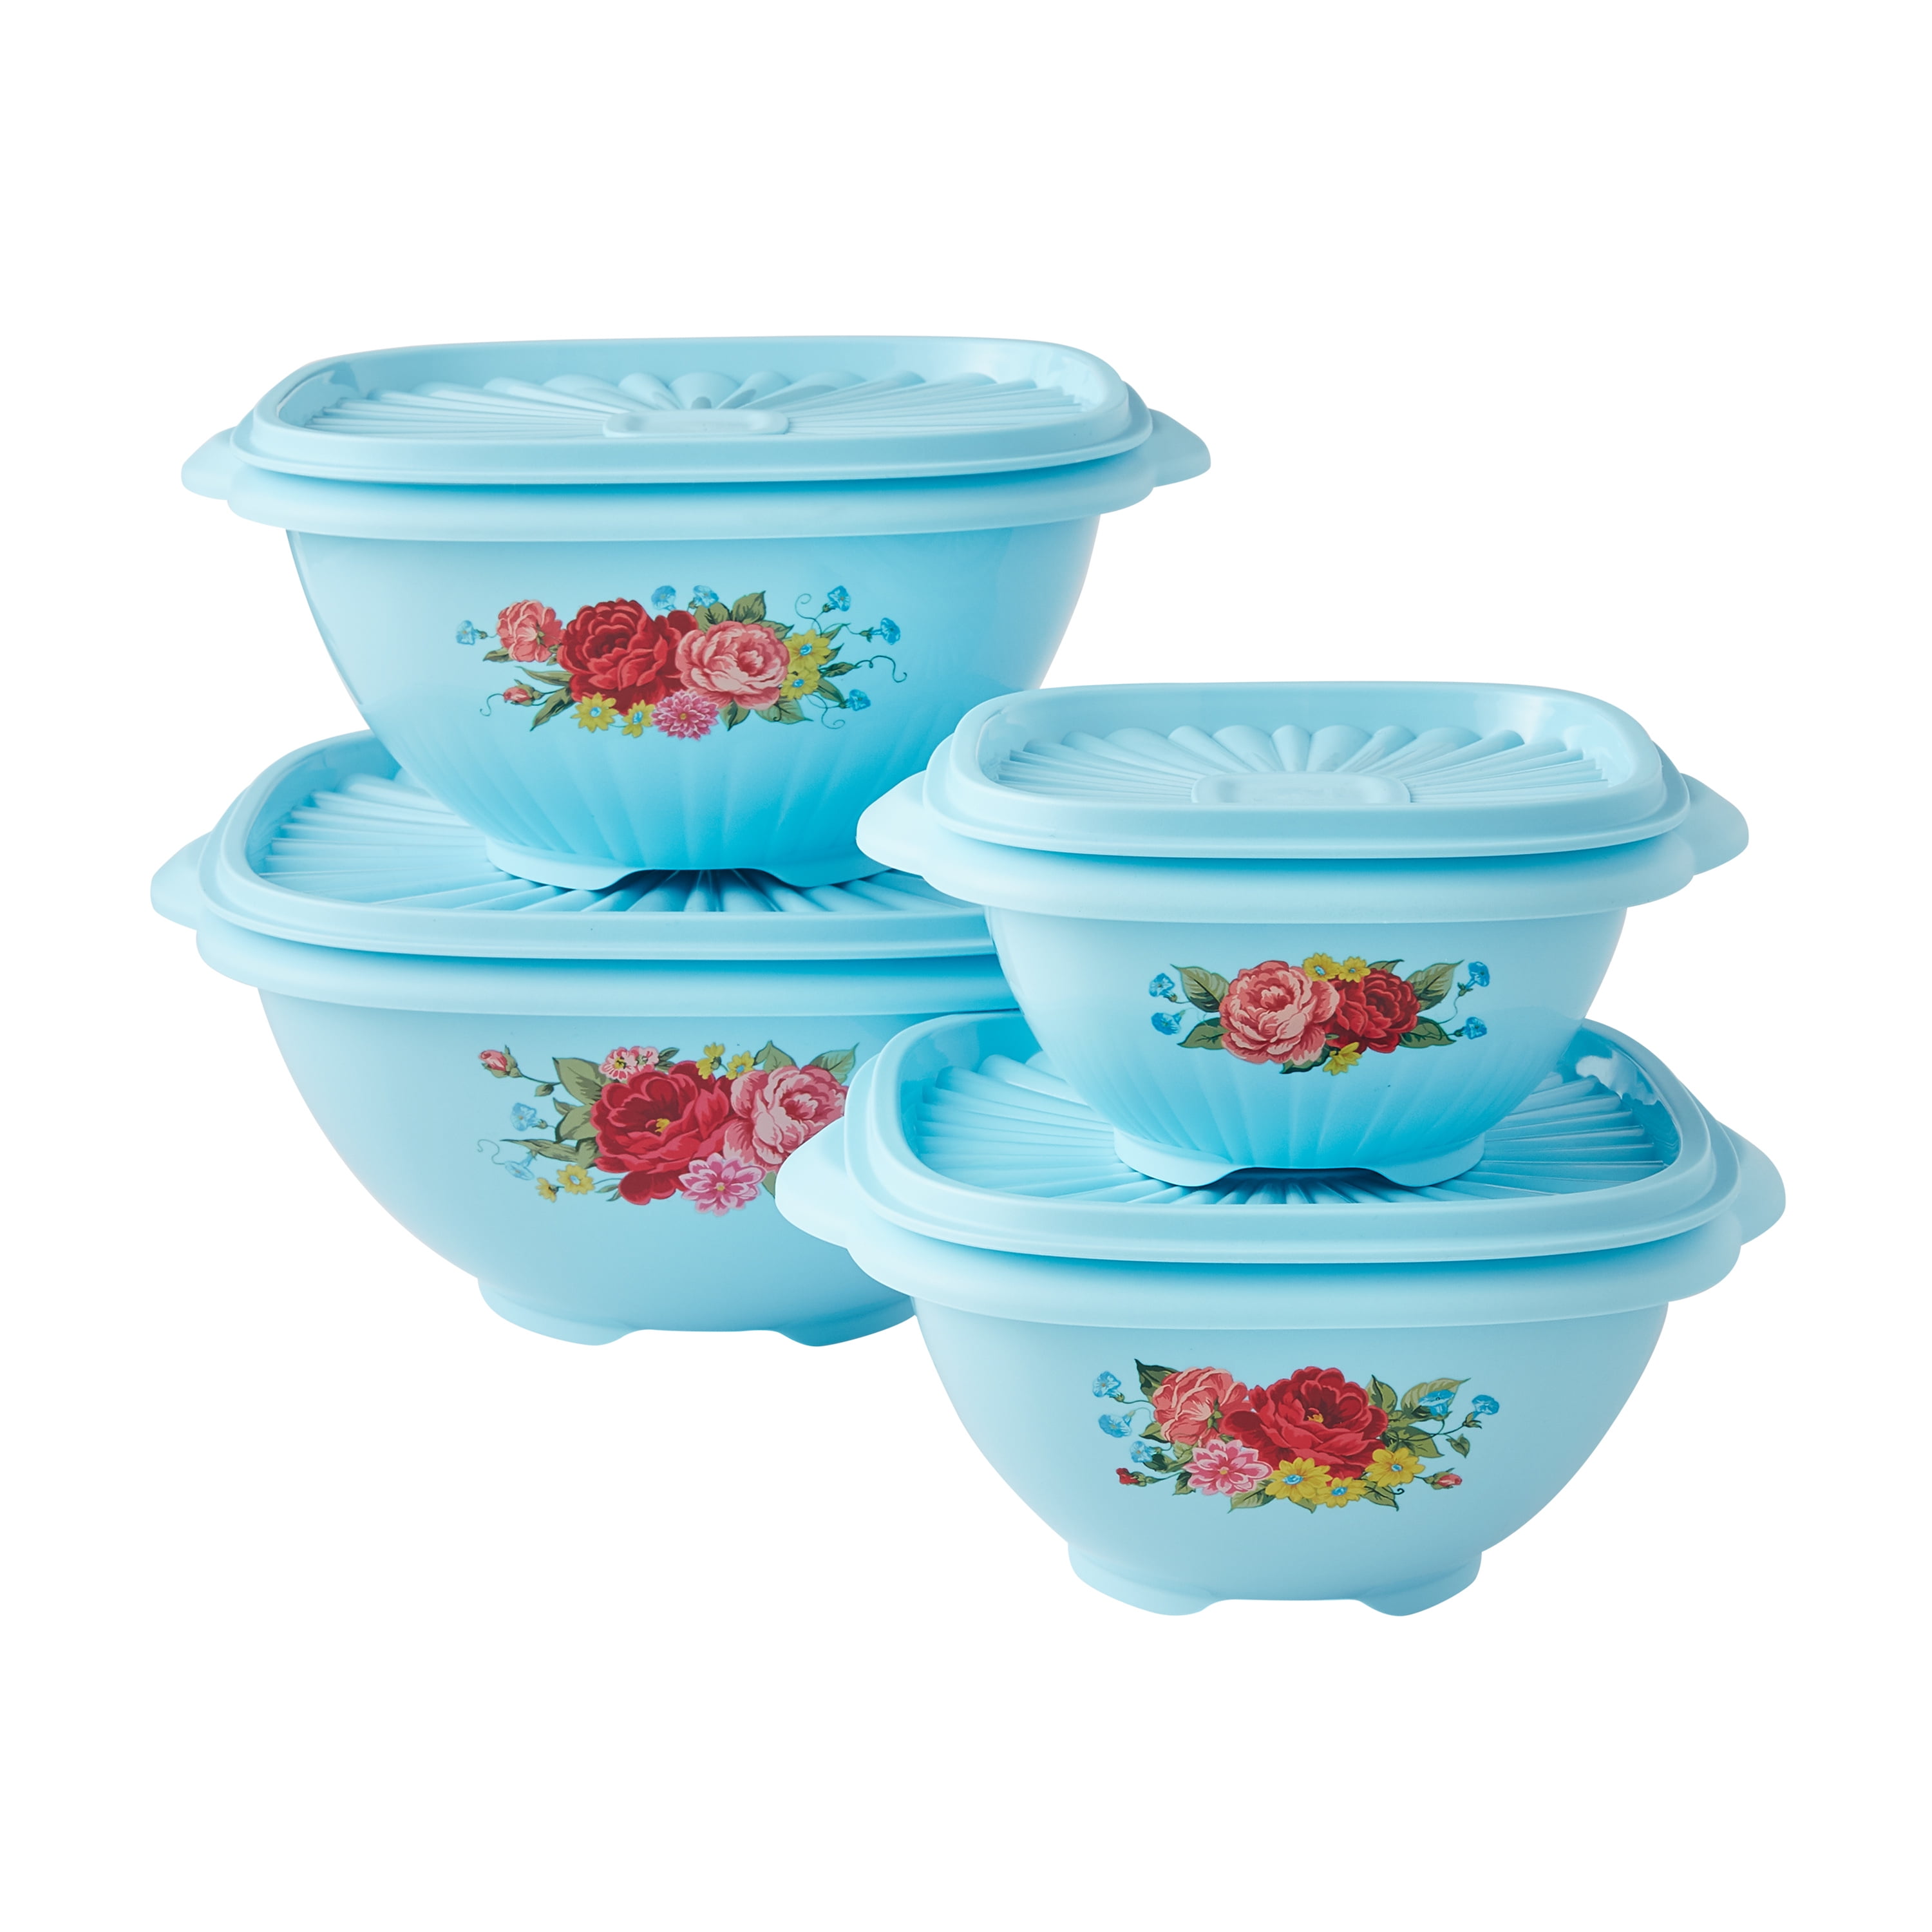 Tupperware Heritage Wonderlier 10.5 Cup Food Storage Bowl Set of 2 in  Vintage Colors- Dishwasher Safe & BPA Free - (2 Containers + 2 Lids)